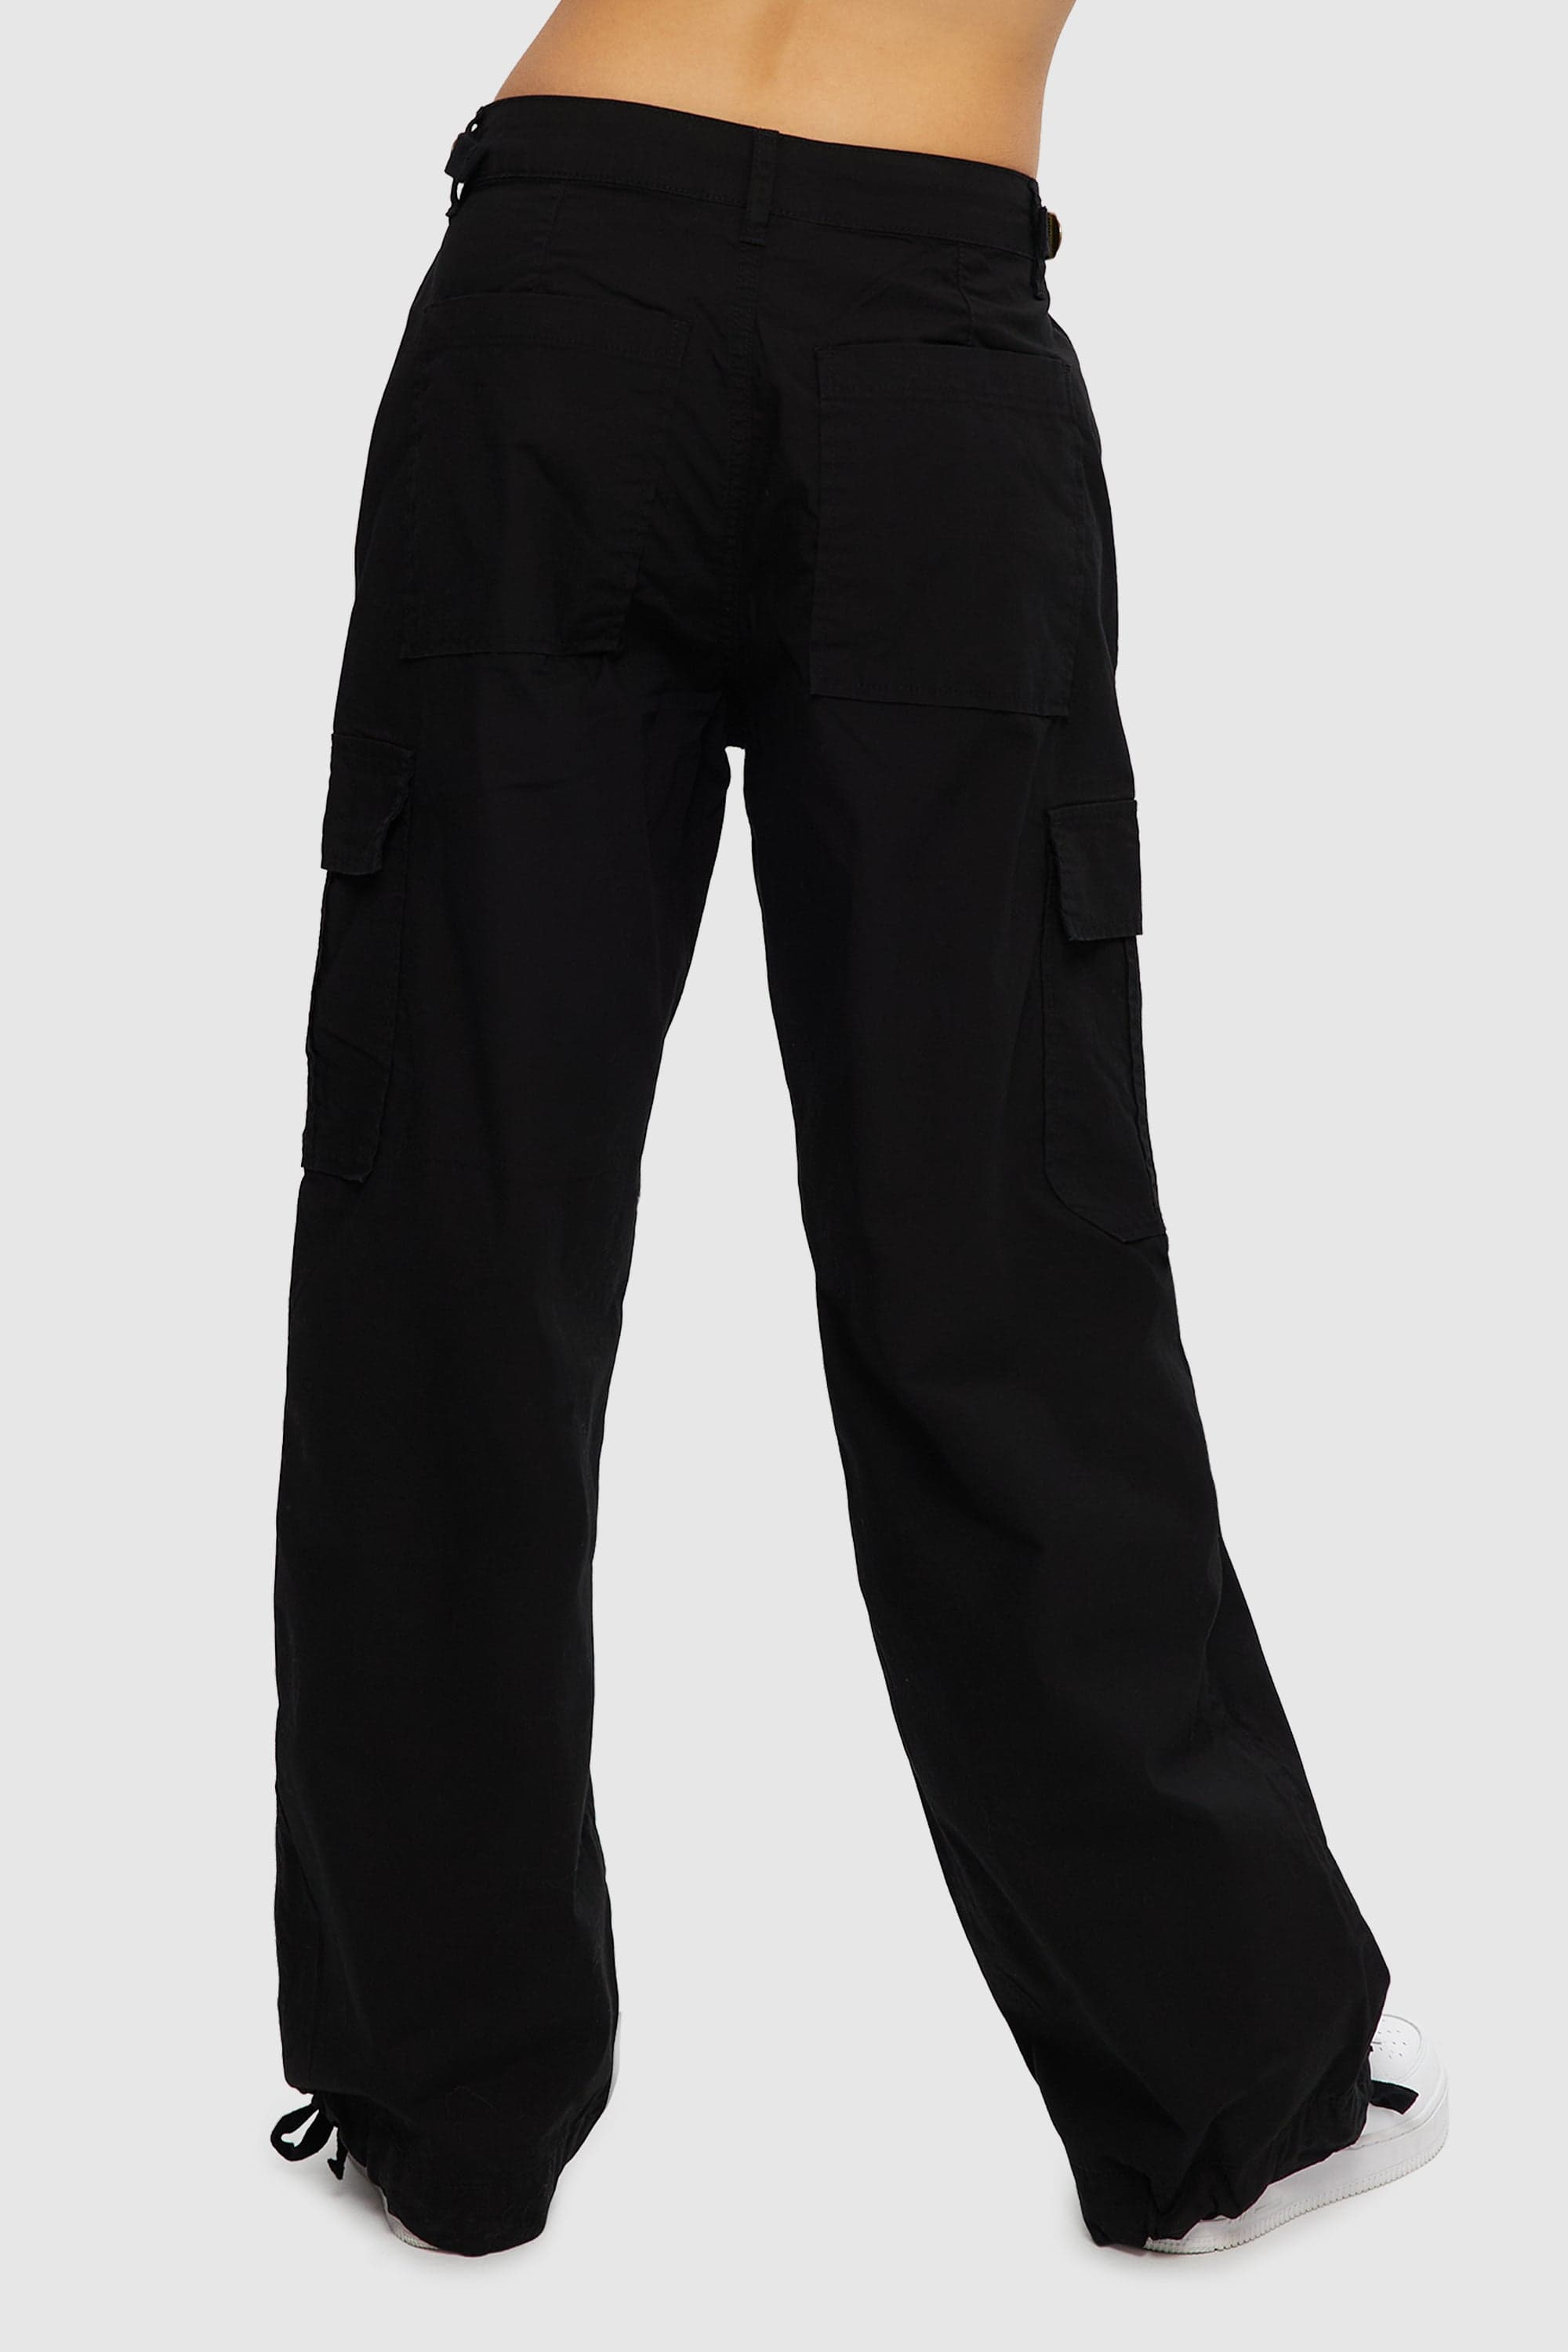 Buy AOWKULAE Girls & Women's Casual Cargo Jogger Pants, 3T - Women 2XL,  A-khaki, 11-12 Years at